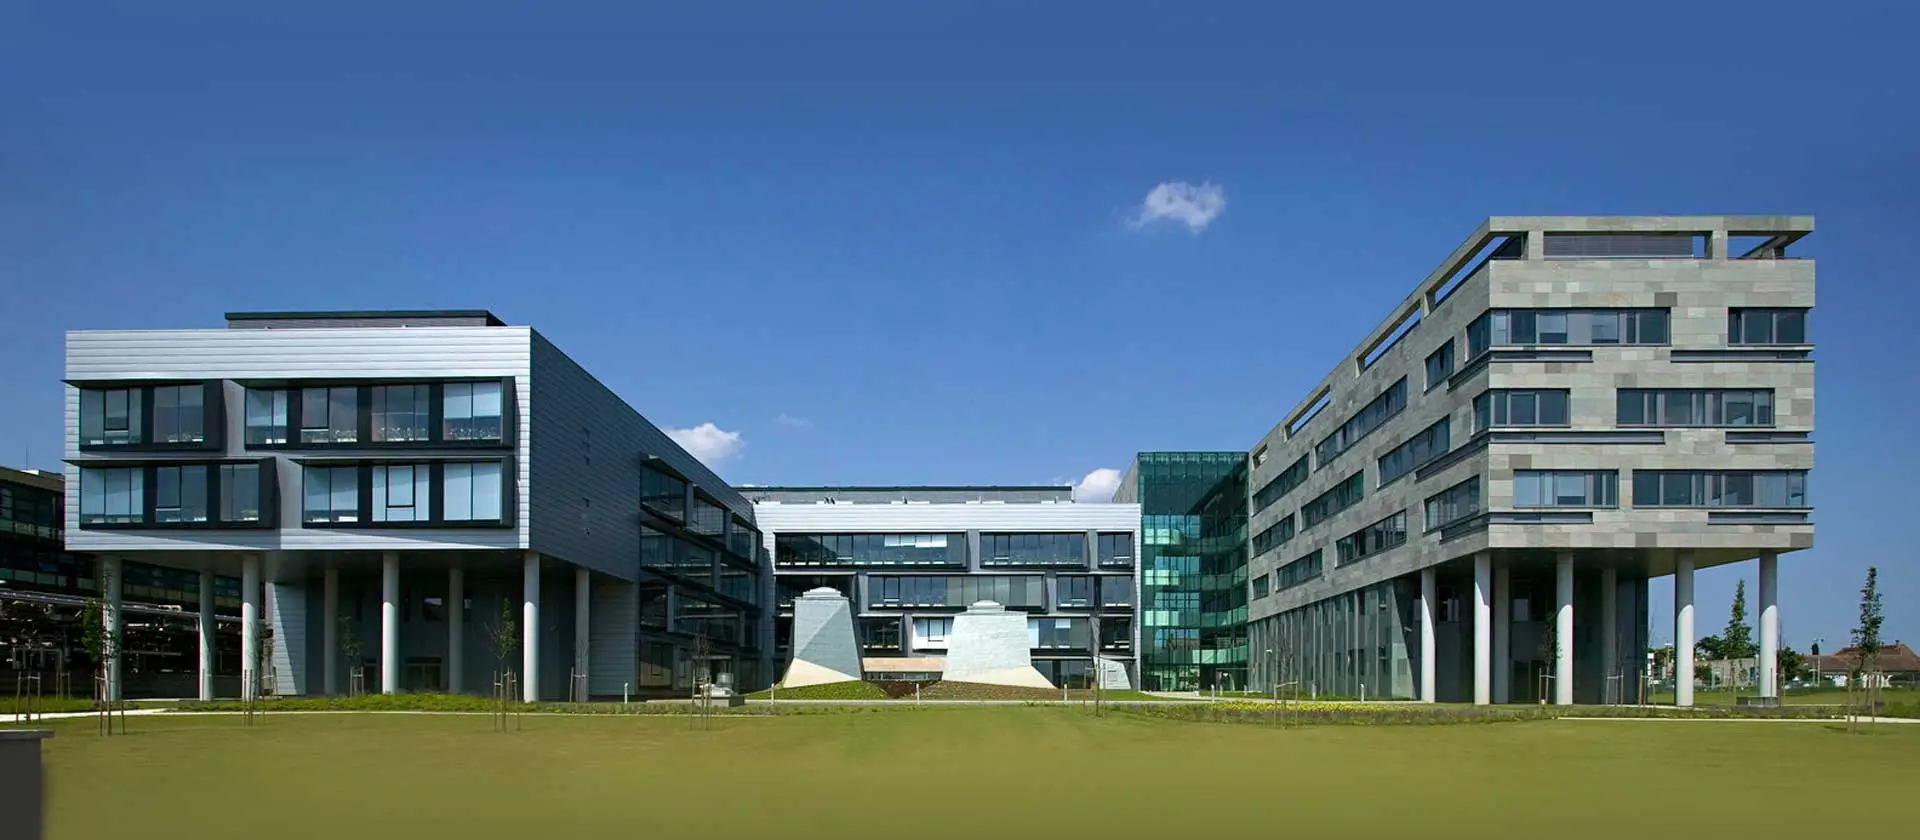 Gedeon Richter Pharma GmbH